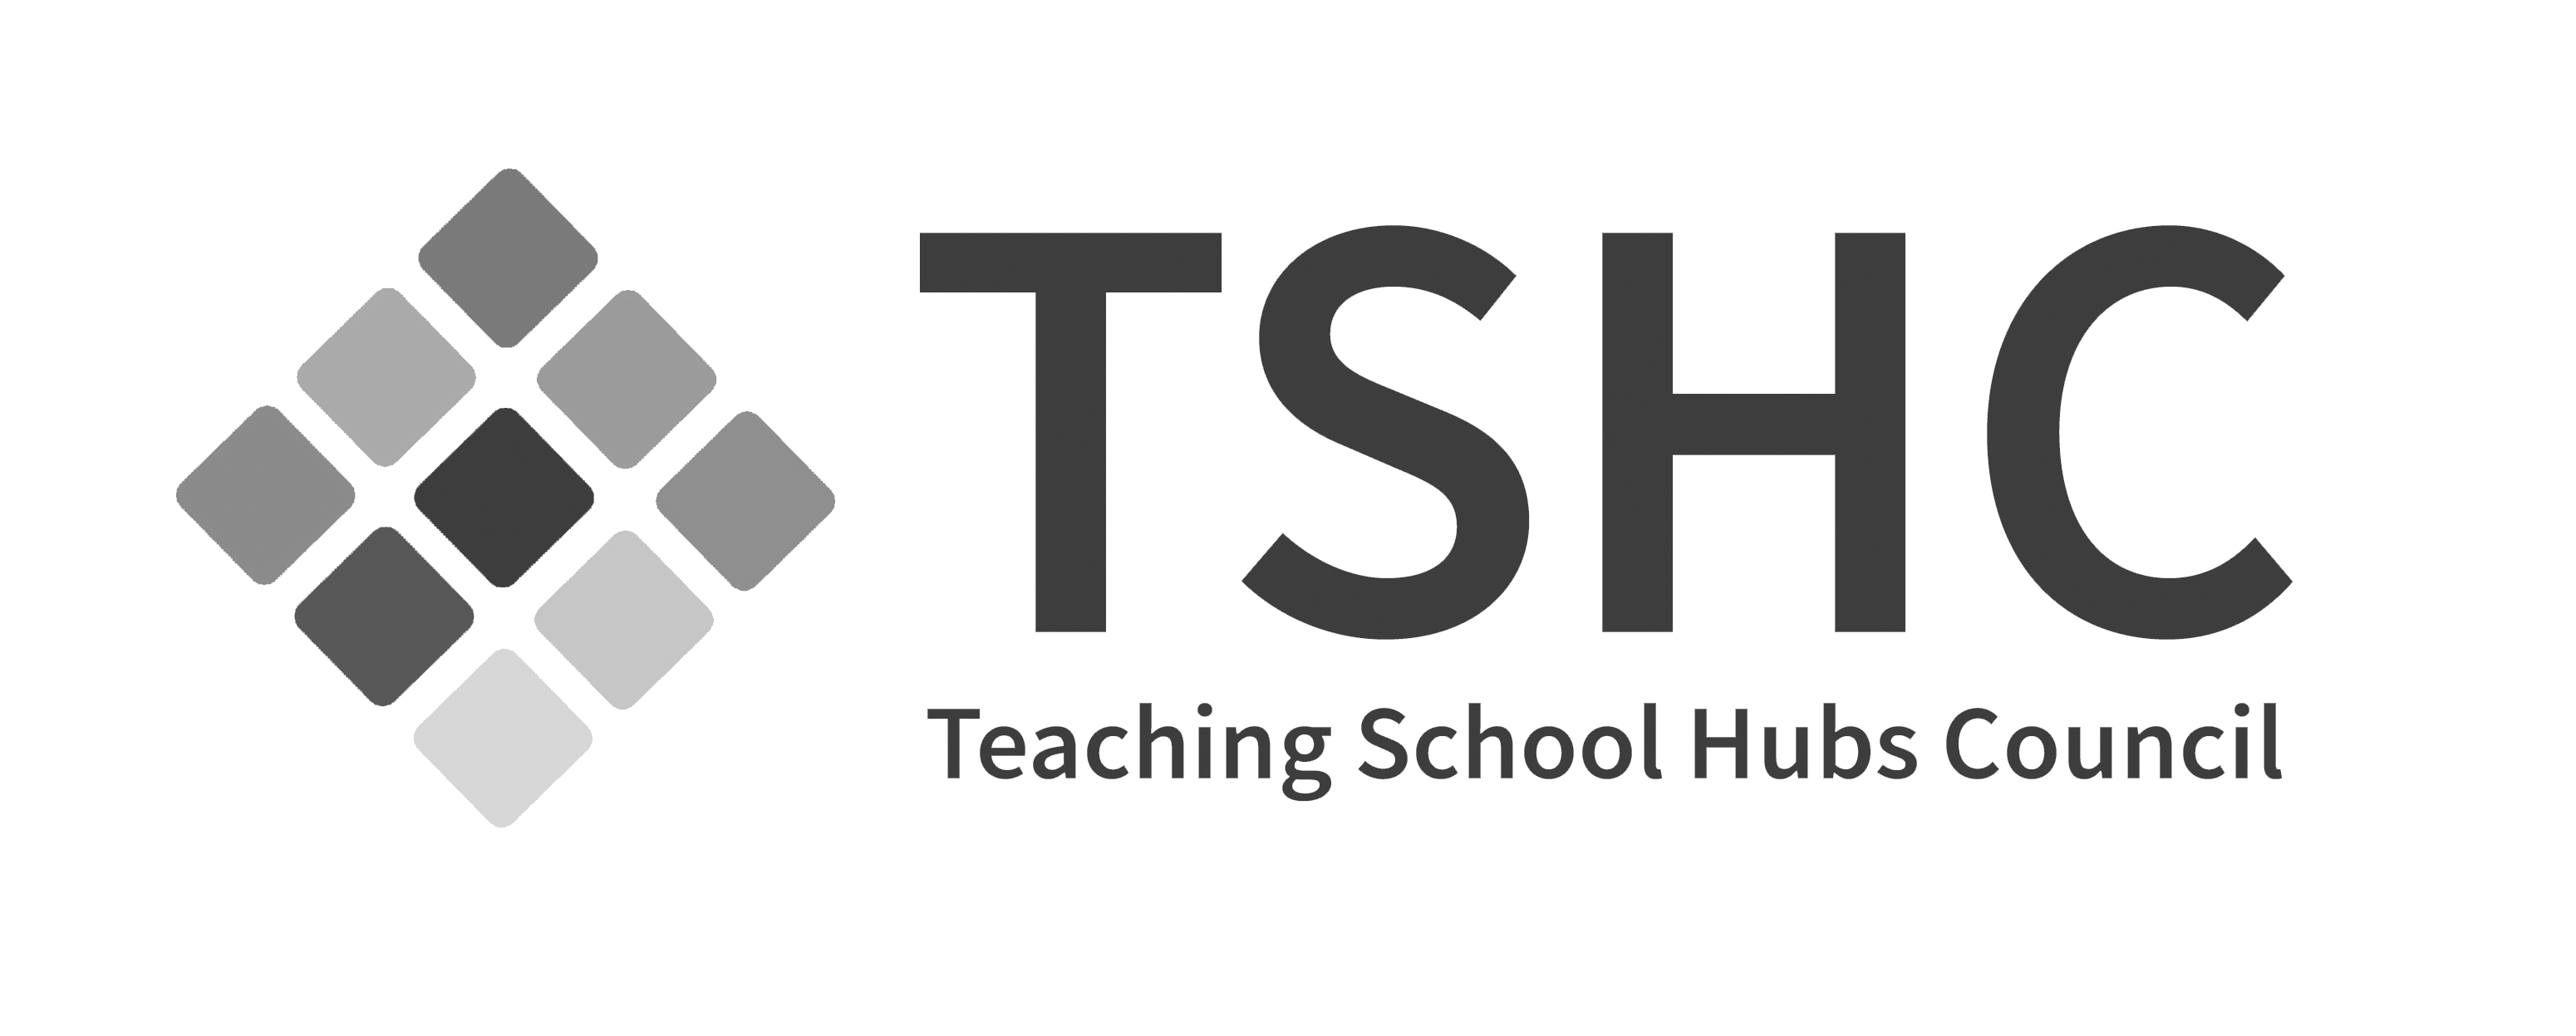 Teaching Schools Council